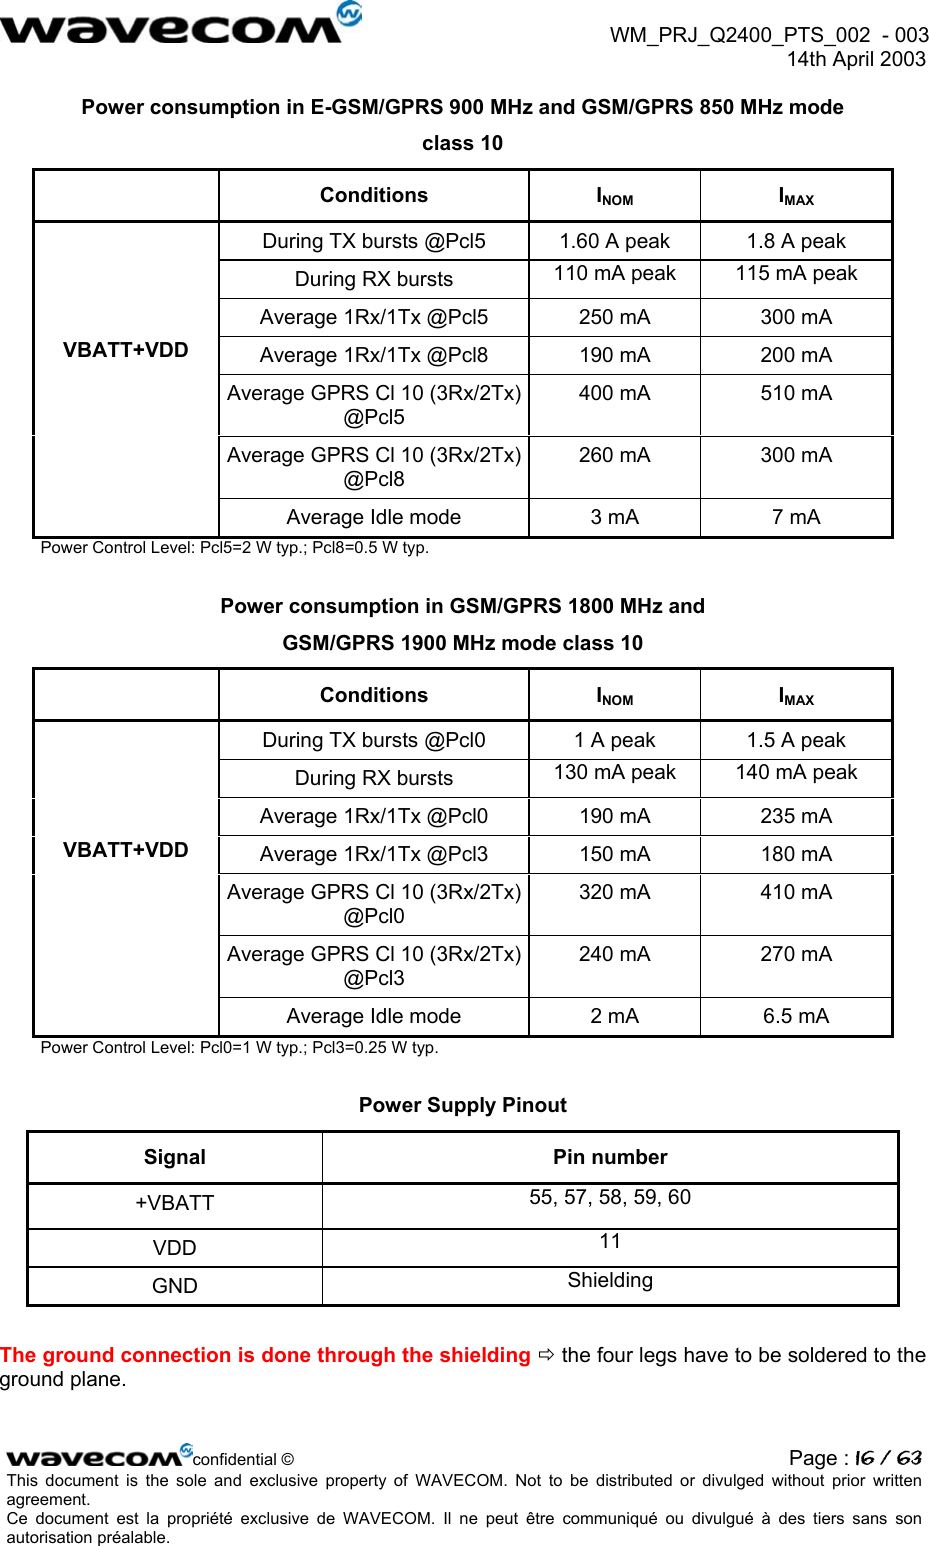  WM_PRJ_Q2400_PTS_002  - 003  14th April 2003   Power consumption in E-GSM/GPRS 900 MHz and GSM/GPRS 850 MHz mode class 10  Conditions INOM IMAX During TX bursts @Pcl5  1.60 A peak  1.8 A peak During RX bursts  110 mA peak  115 mA peak Average 1Rx/1Tx @Pcl5  250 mA  300 mA Average 1Rx/1Tx @Pcl8  190 mA  200 mA Average GPRS Cl 10 (3Rx/2Tx) @Pcl5 400 mA  510 mA Average GPRS Cl 10 (3Rx/2Tx) @Pcl8 260 mA  300 mA    VBATT+VDD    Average Idle mode  3 mA  7 mA Power Control Level: Pcl5=2 W typ.; Pcl8=0.5 W typ.  Power consumption in GSM/GPRS 1800 MHz and  GSM/GPRS 1900 MHz mode class 10  Conditions INOM IMAX During TX bursts @Pcl0  1 A peak  1.5 A peak During RX bursts  130 mA peak  140 mA peak Average 1Rx/1Tx @Pcl0  190 mA  235 mA Average 1Rx/1Tx @Pcl3  150 mA  180 mA Average GPRS Cl 10 (3Rx/2Tx) @Pcl0 320 mA  410 mA Average GPRS Cl 10 (3Rx/2Tx) @Pcl3 240 mA  270 mA    VBATT+VDD    Average Idle mode  2 mA  6.5 mA Power Control Level: Pcl0=1 W typ.; Pcl3=0.25 W typ.  Power Supply Pinout Signal Pin number +VBATT  55, 57, 58, 59, 60 VDD  11 GND  Shielding  The ground connection is done through the shielding  the four legs have to be soldered to the ground plane. confidential © Page : 16 / 63This document is the sole and exclusive property of WAVECOM. Not to be distributed or divulged without prior written agreement.  Ce document est la propriété exclusive de WAVECOM. Il ne peut être communiqué ou divulgué à des tiers sans son autorisation préalable.  